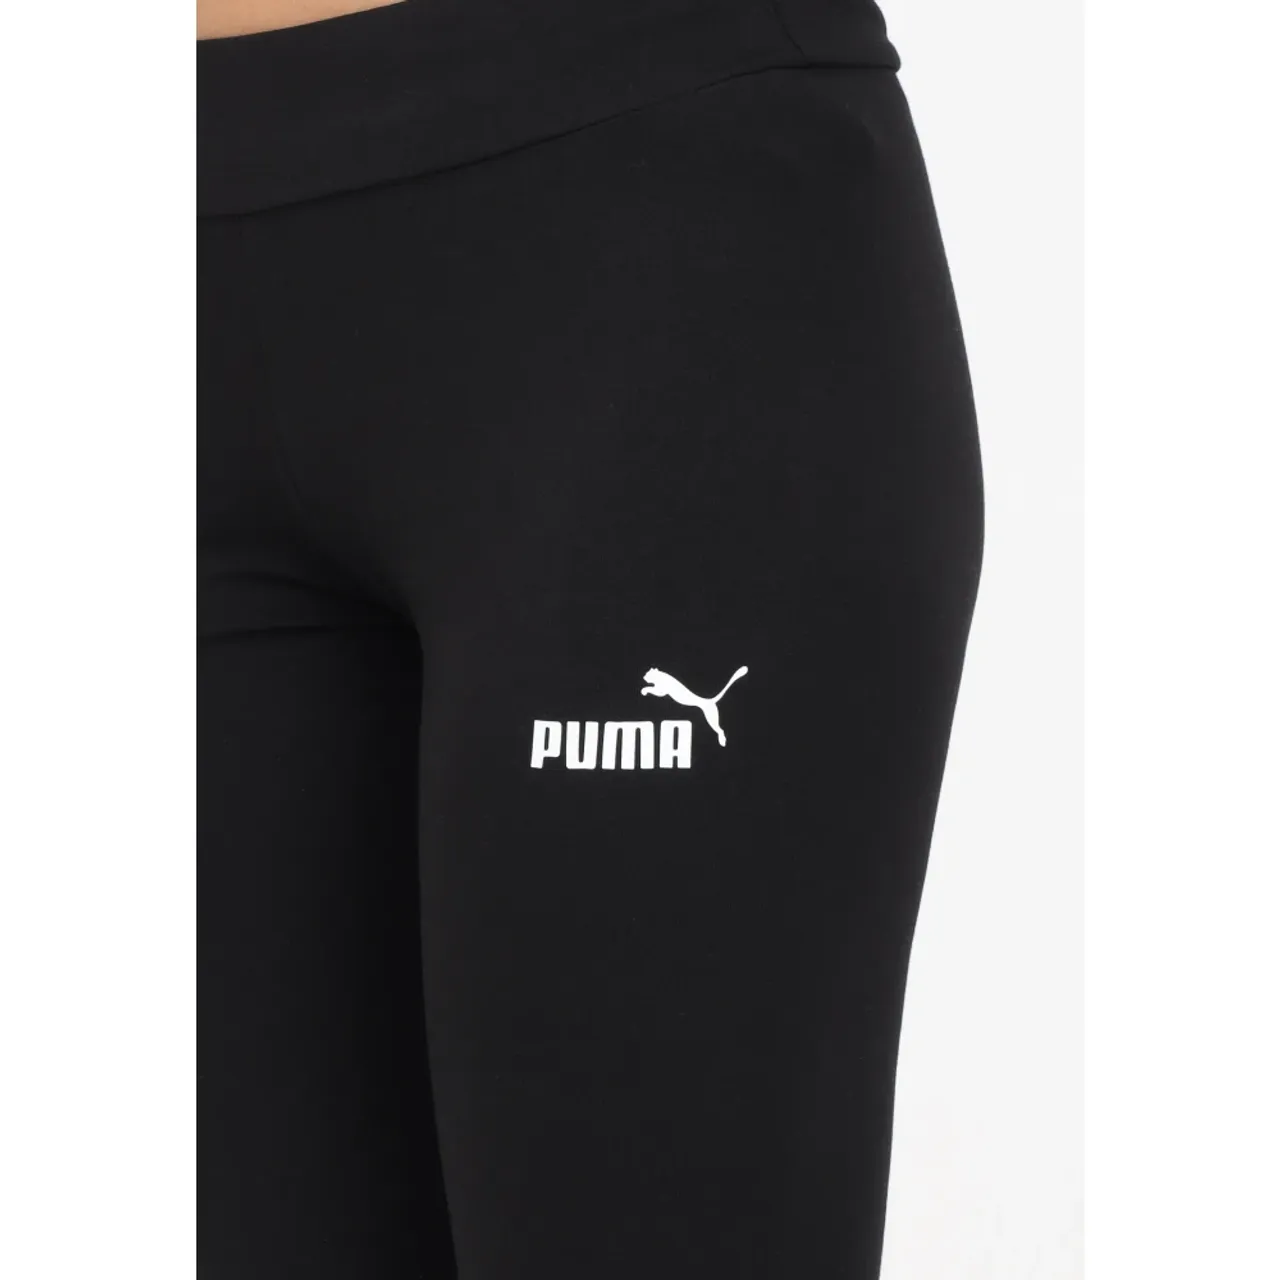 Klassische schwarze Leggings mit Logo Puma